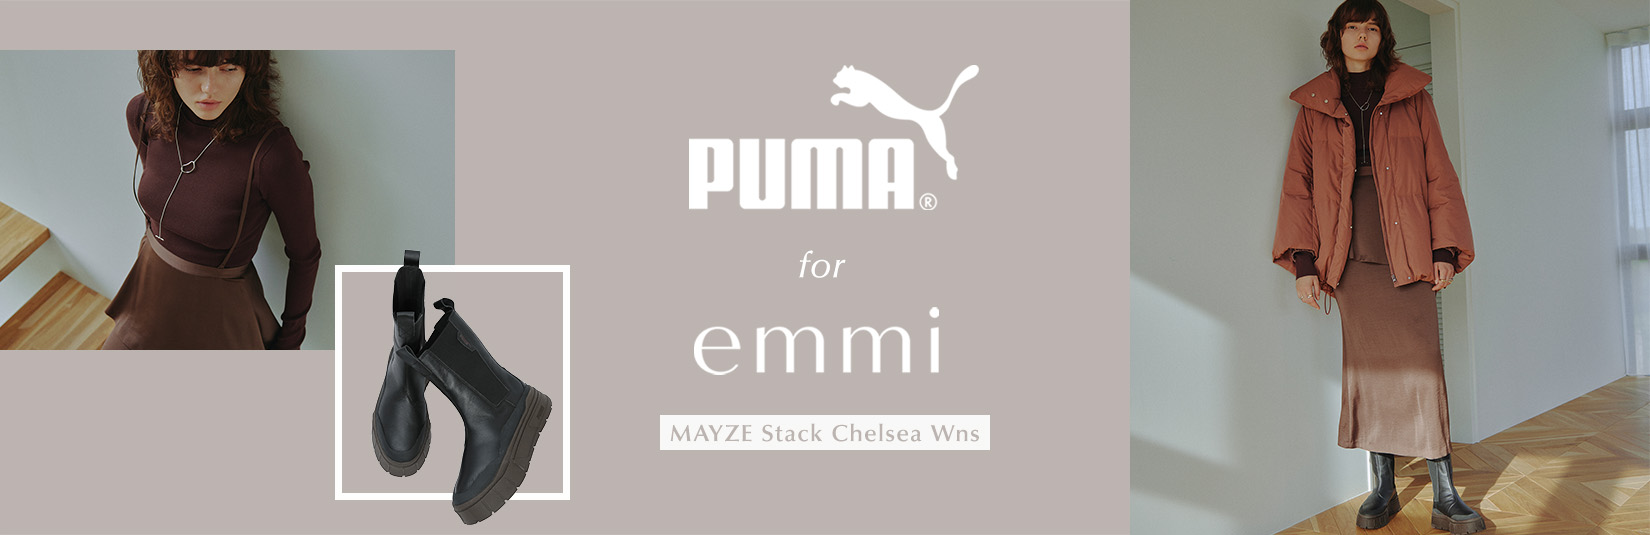 PUMA for emmi MAYZE Stack Chelsea Wns